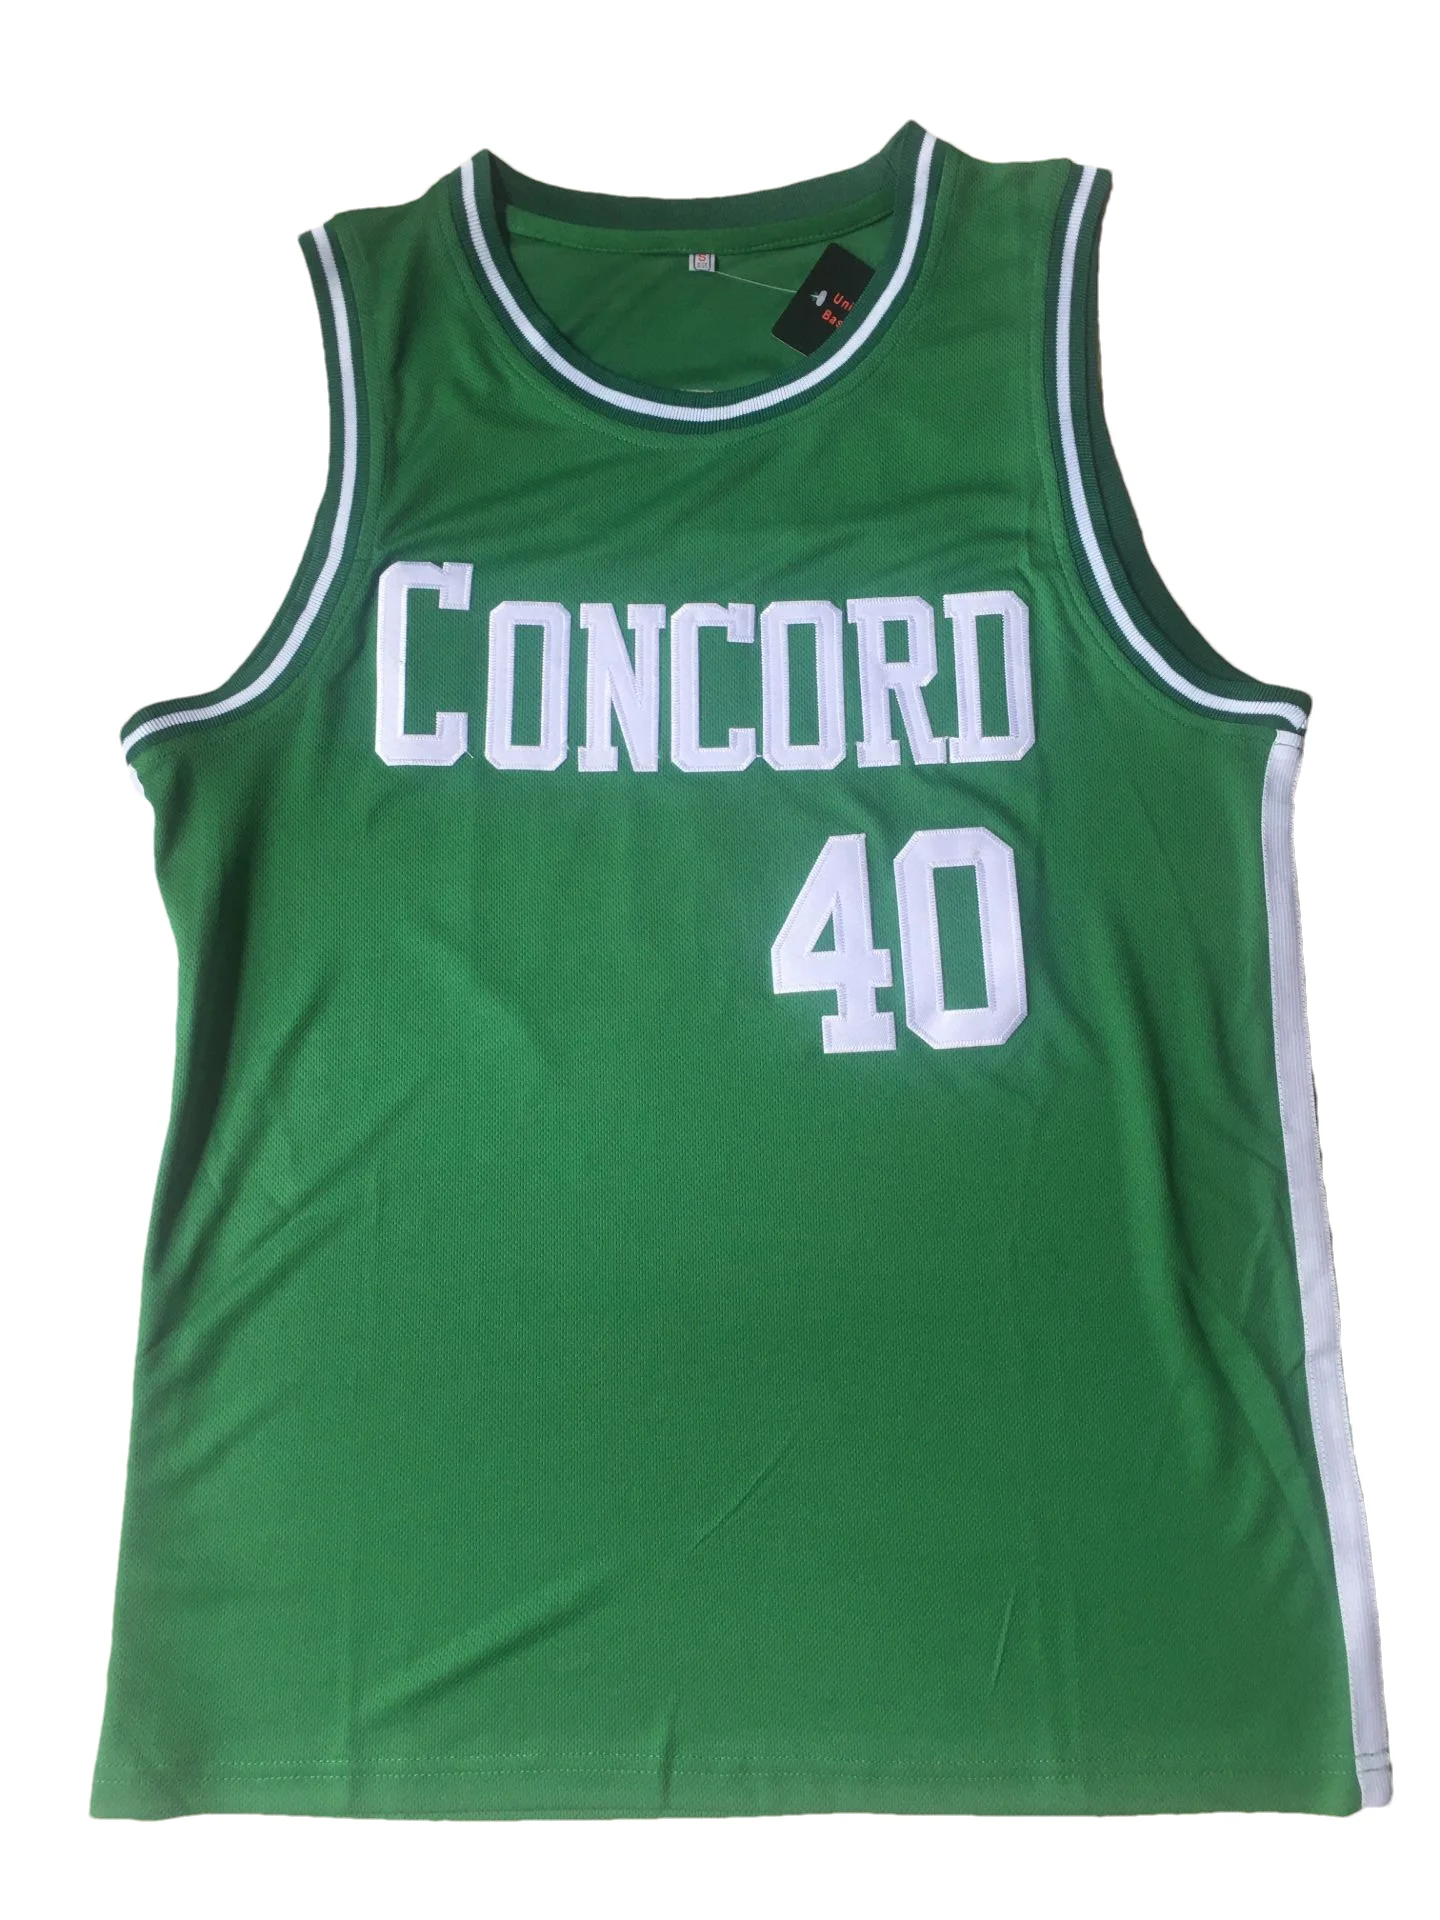 

Mens Shawn Kemp #40 Concord High School Basketball Jersey Green